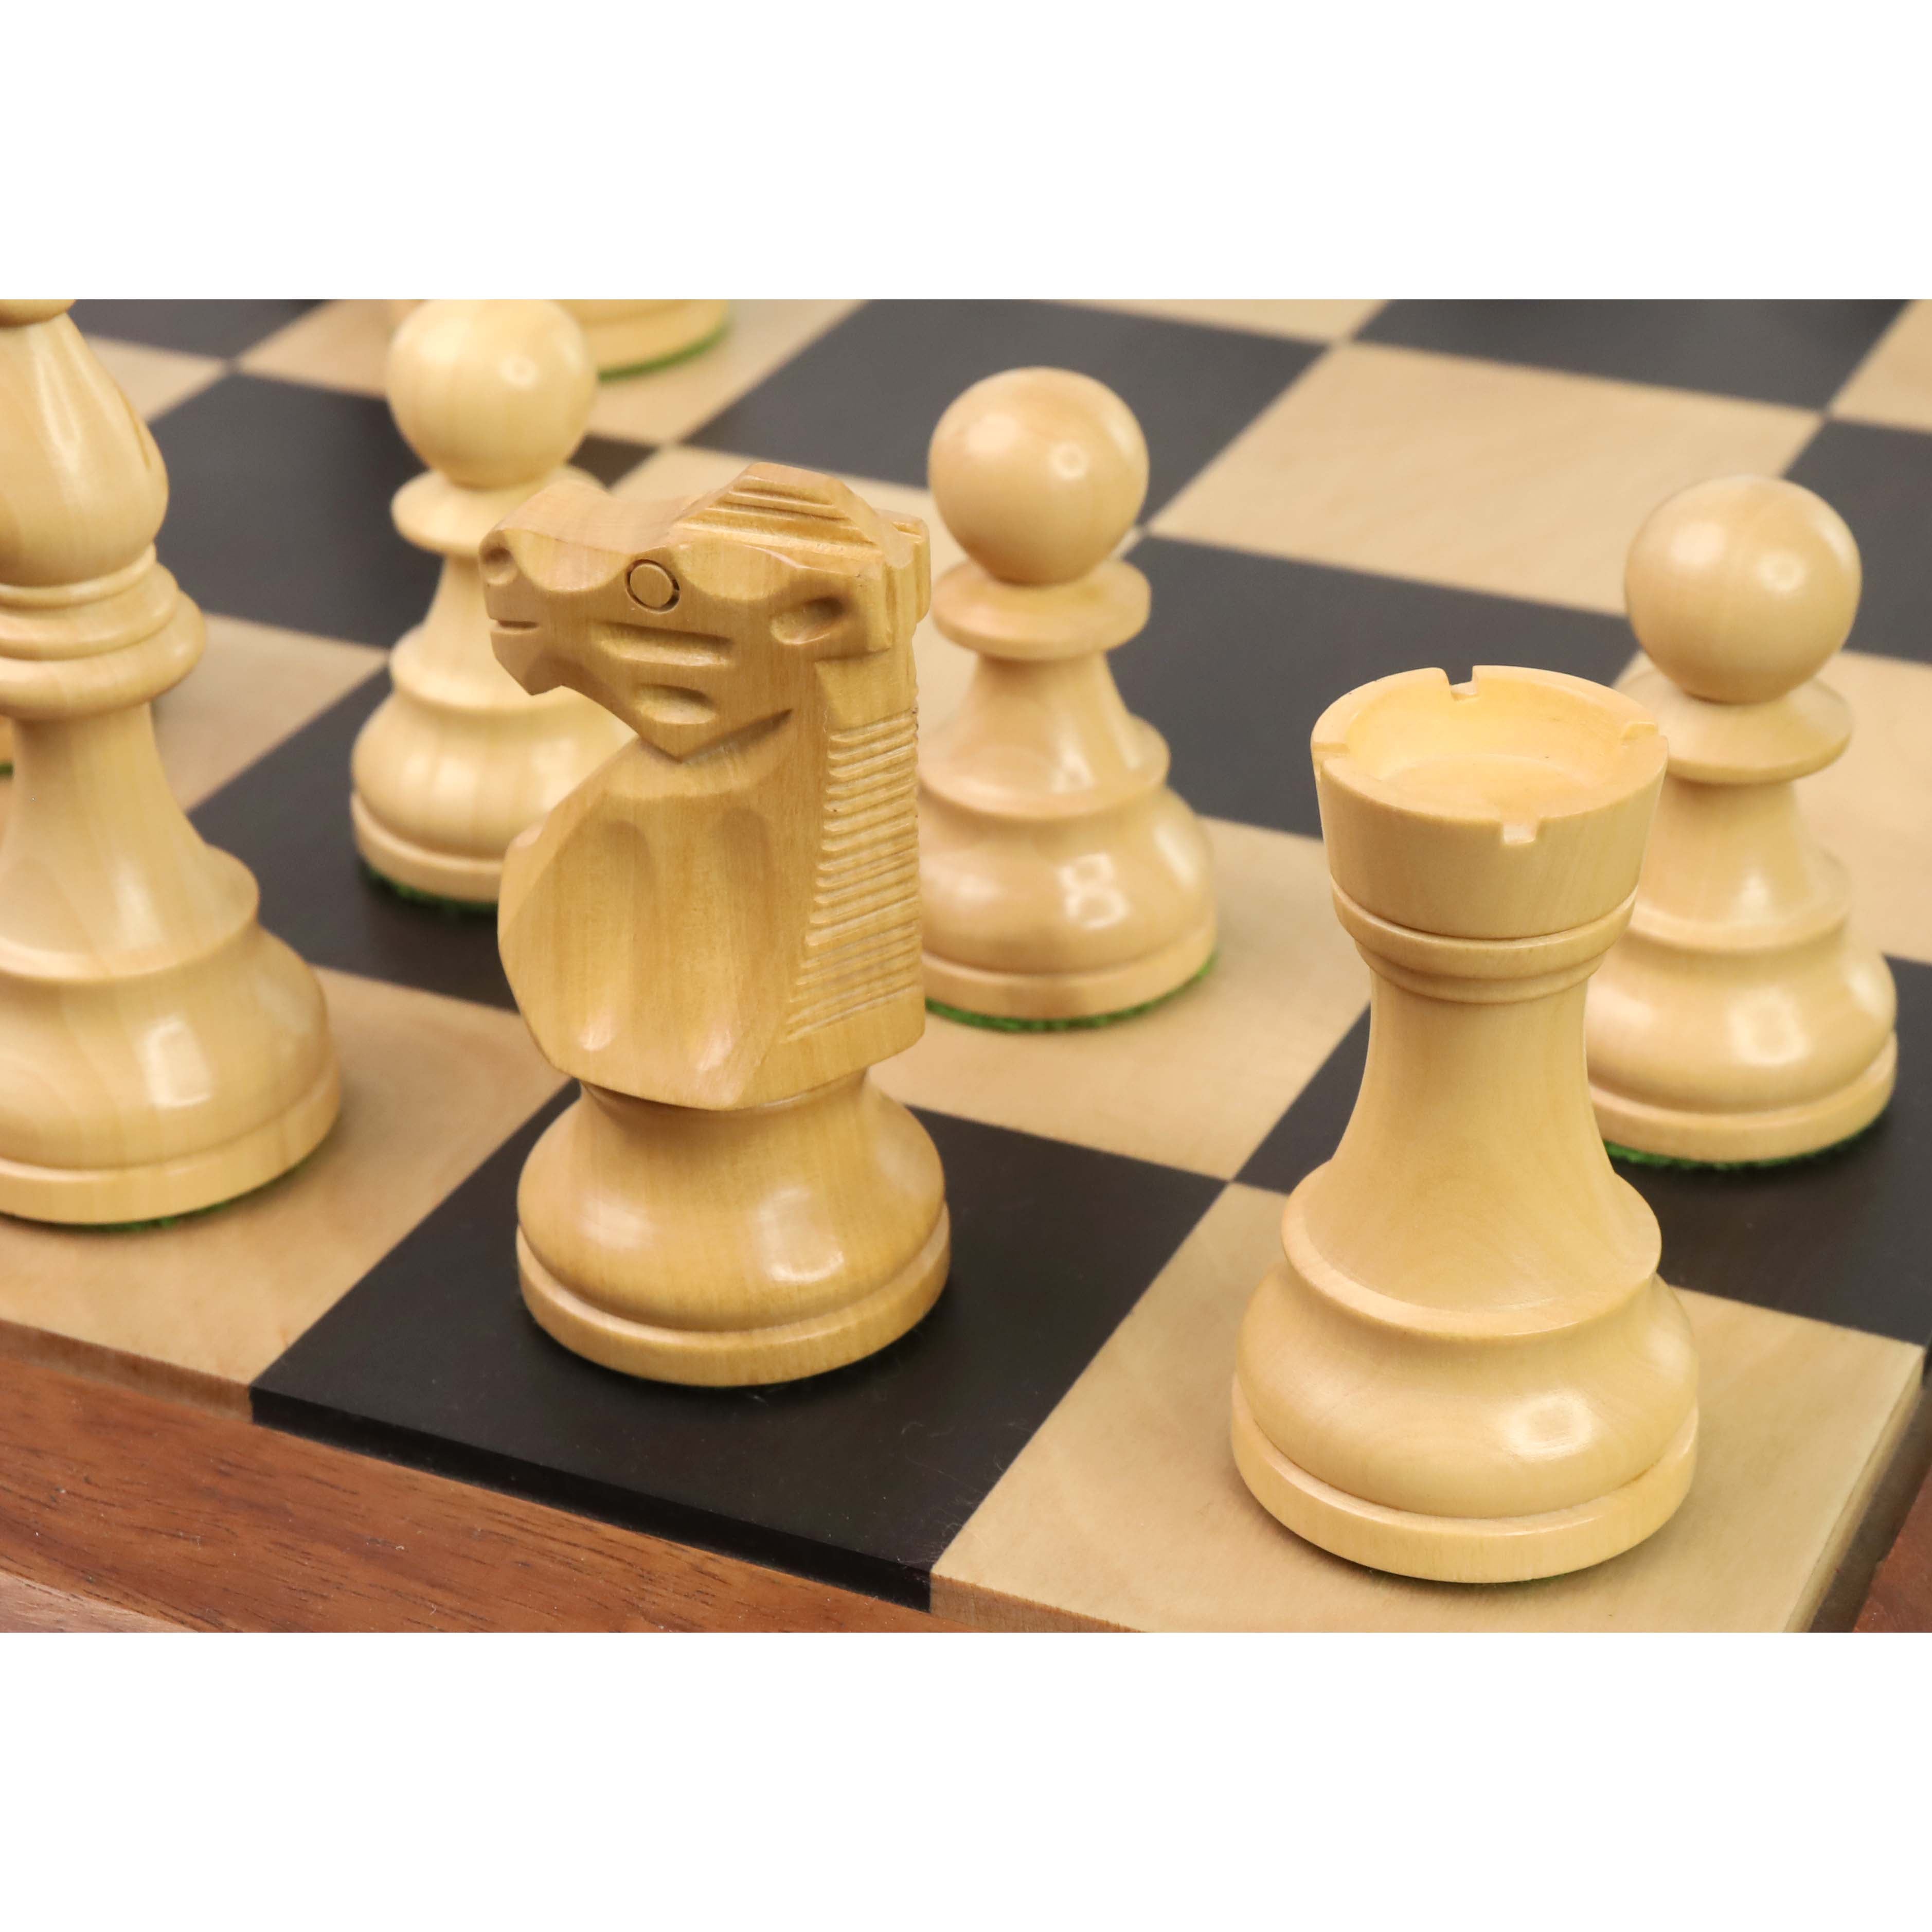 French Lardy Staunton Chess Set with Ebonized & Boxwood Pieces - 2.75 King